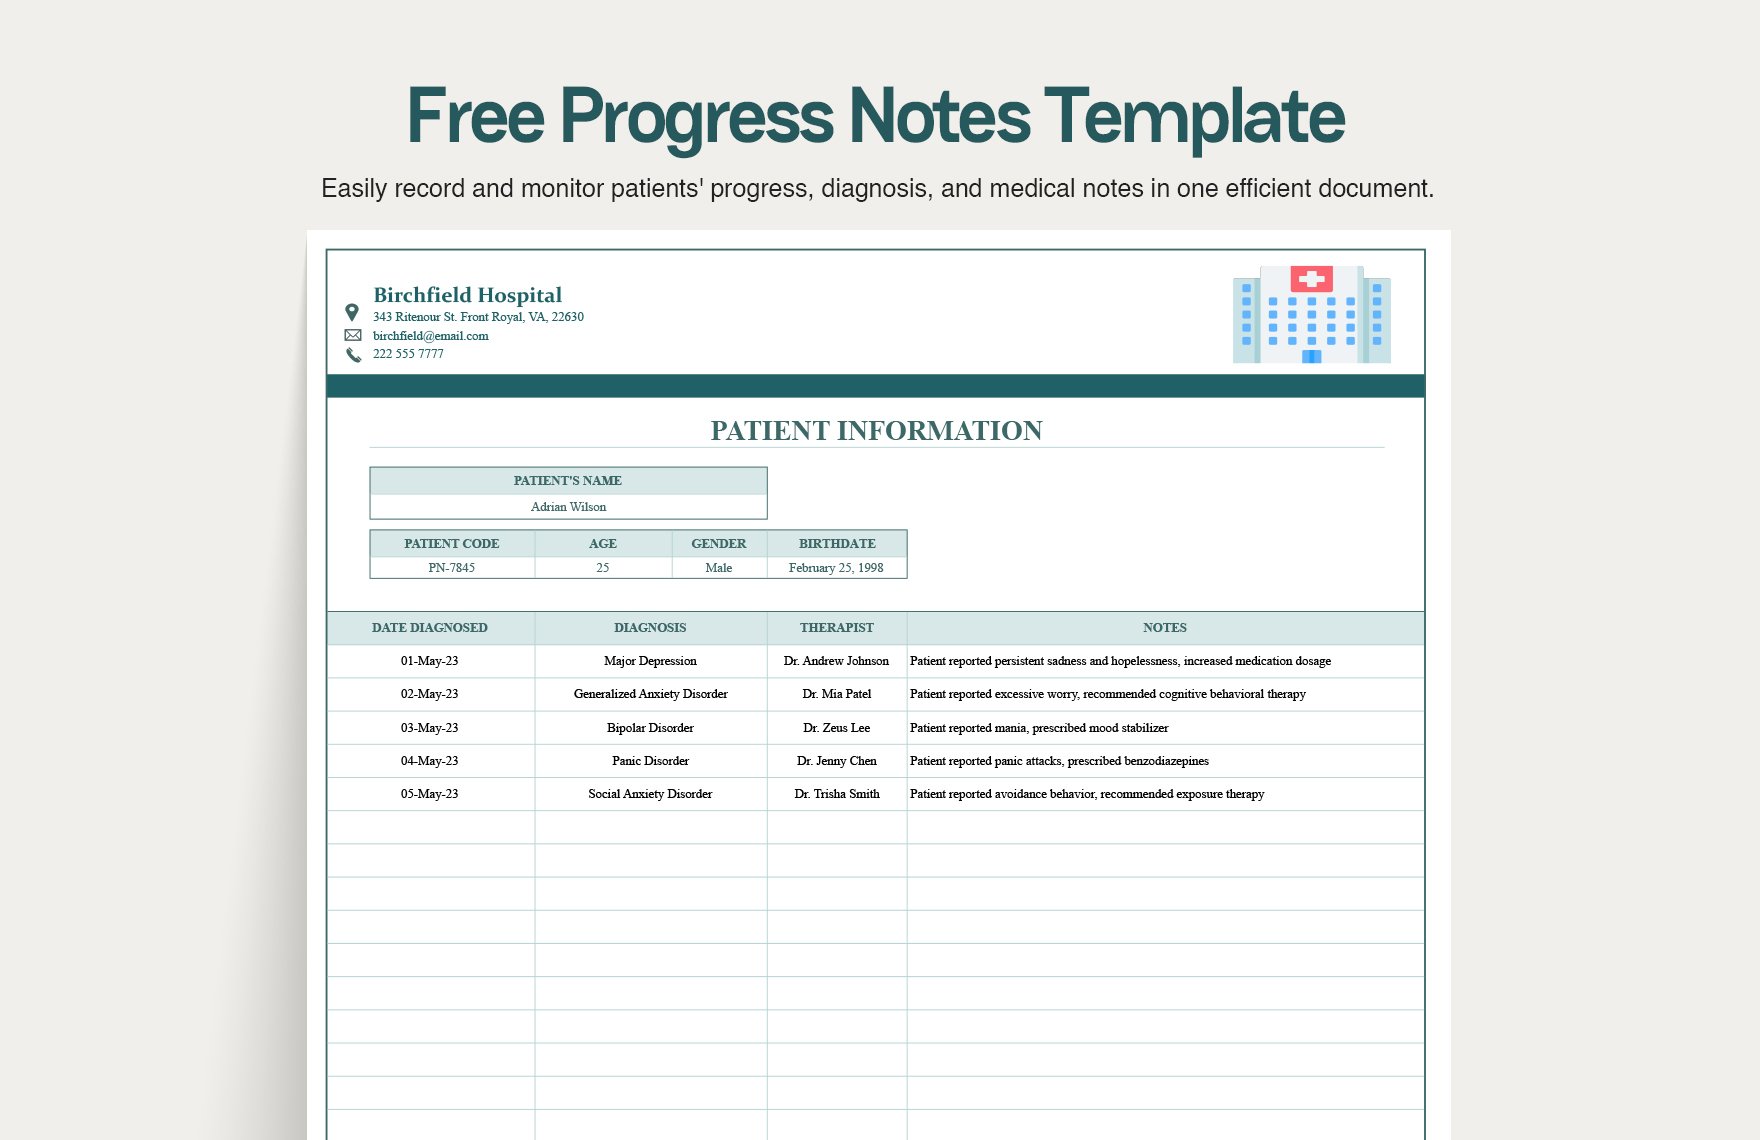 Free Progress Notes Template